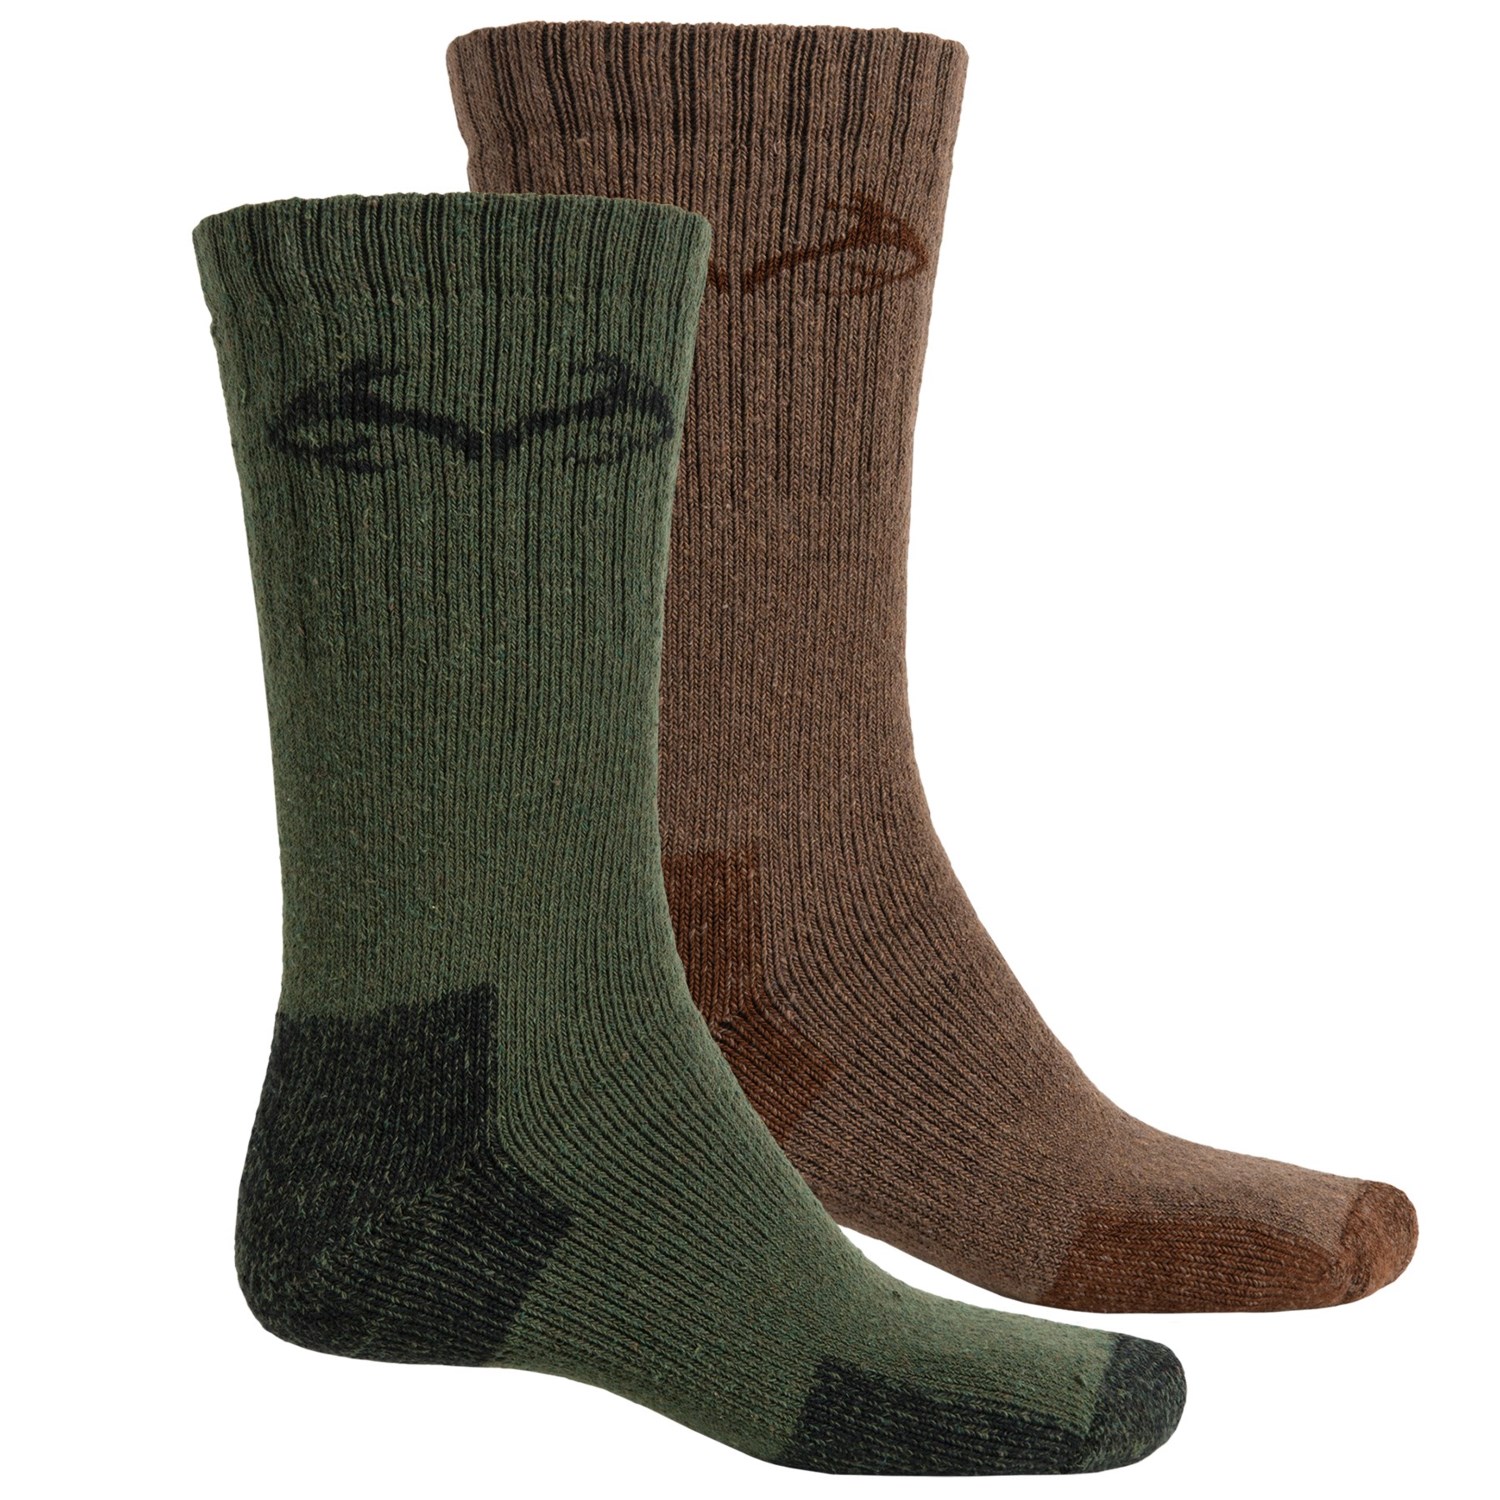 Realtree Full-Cushion ElimiShield® Socks (For Men) - Save 50%